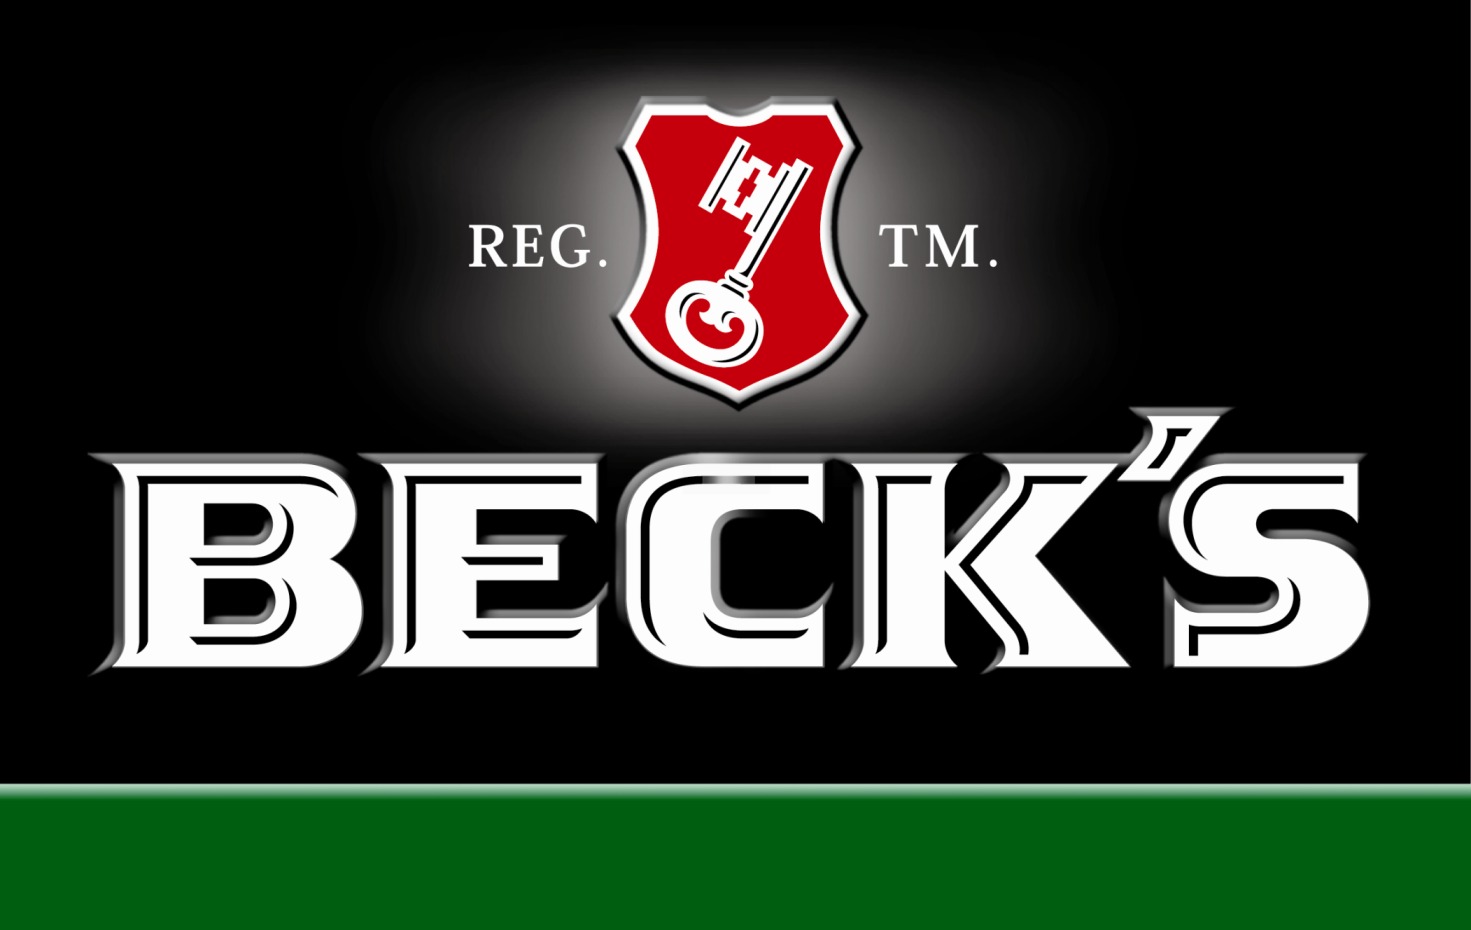 HQ Becks Wallpapers | File 99.38Kb